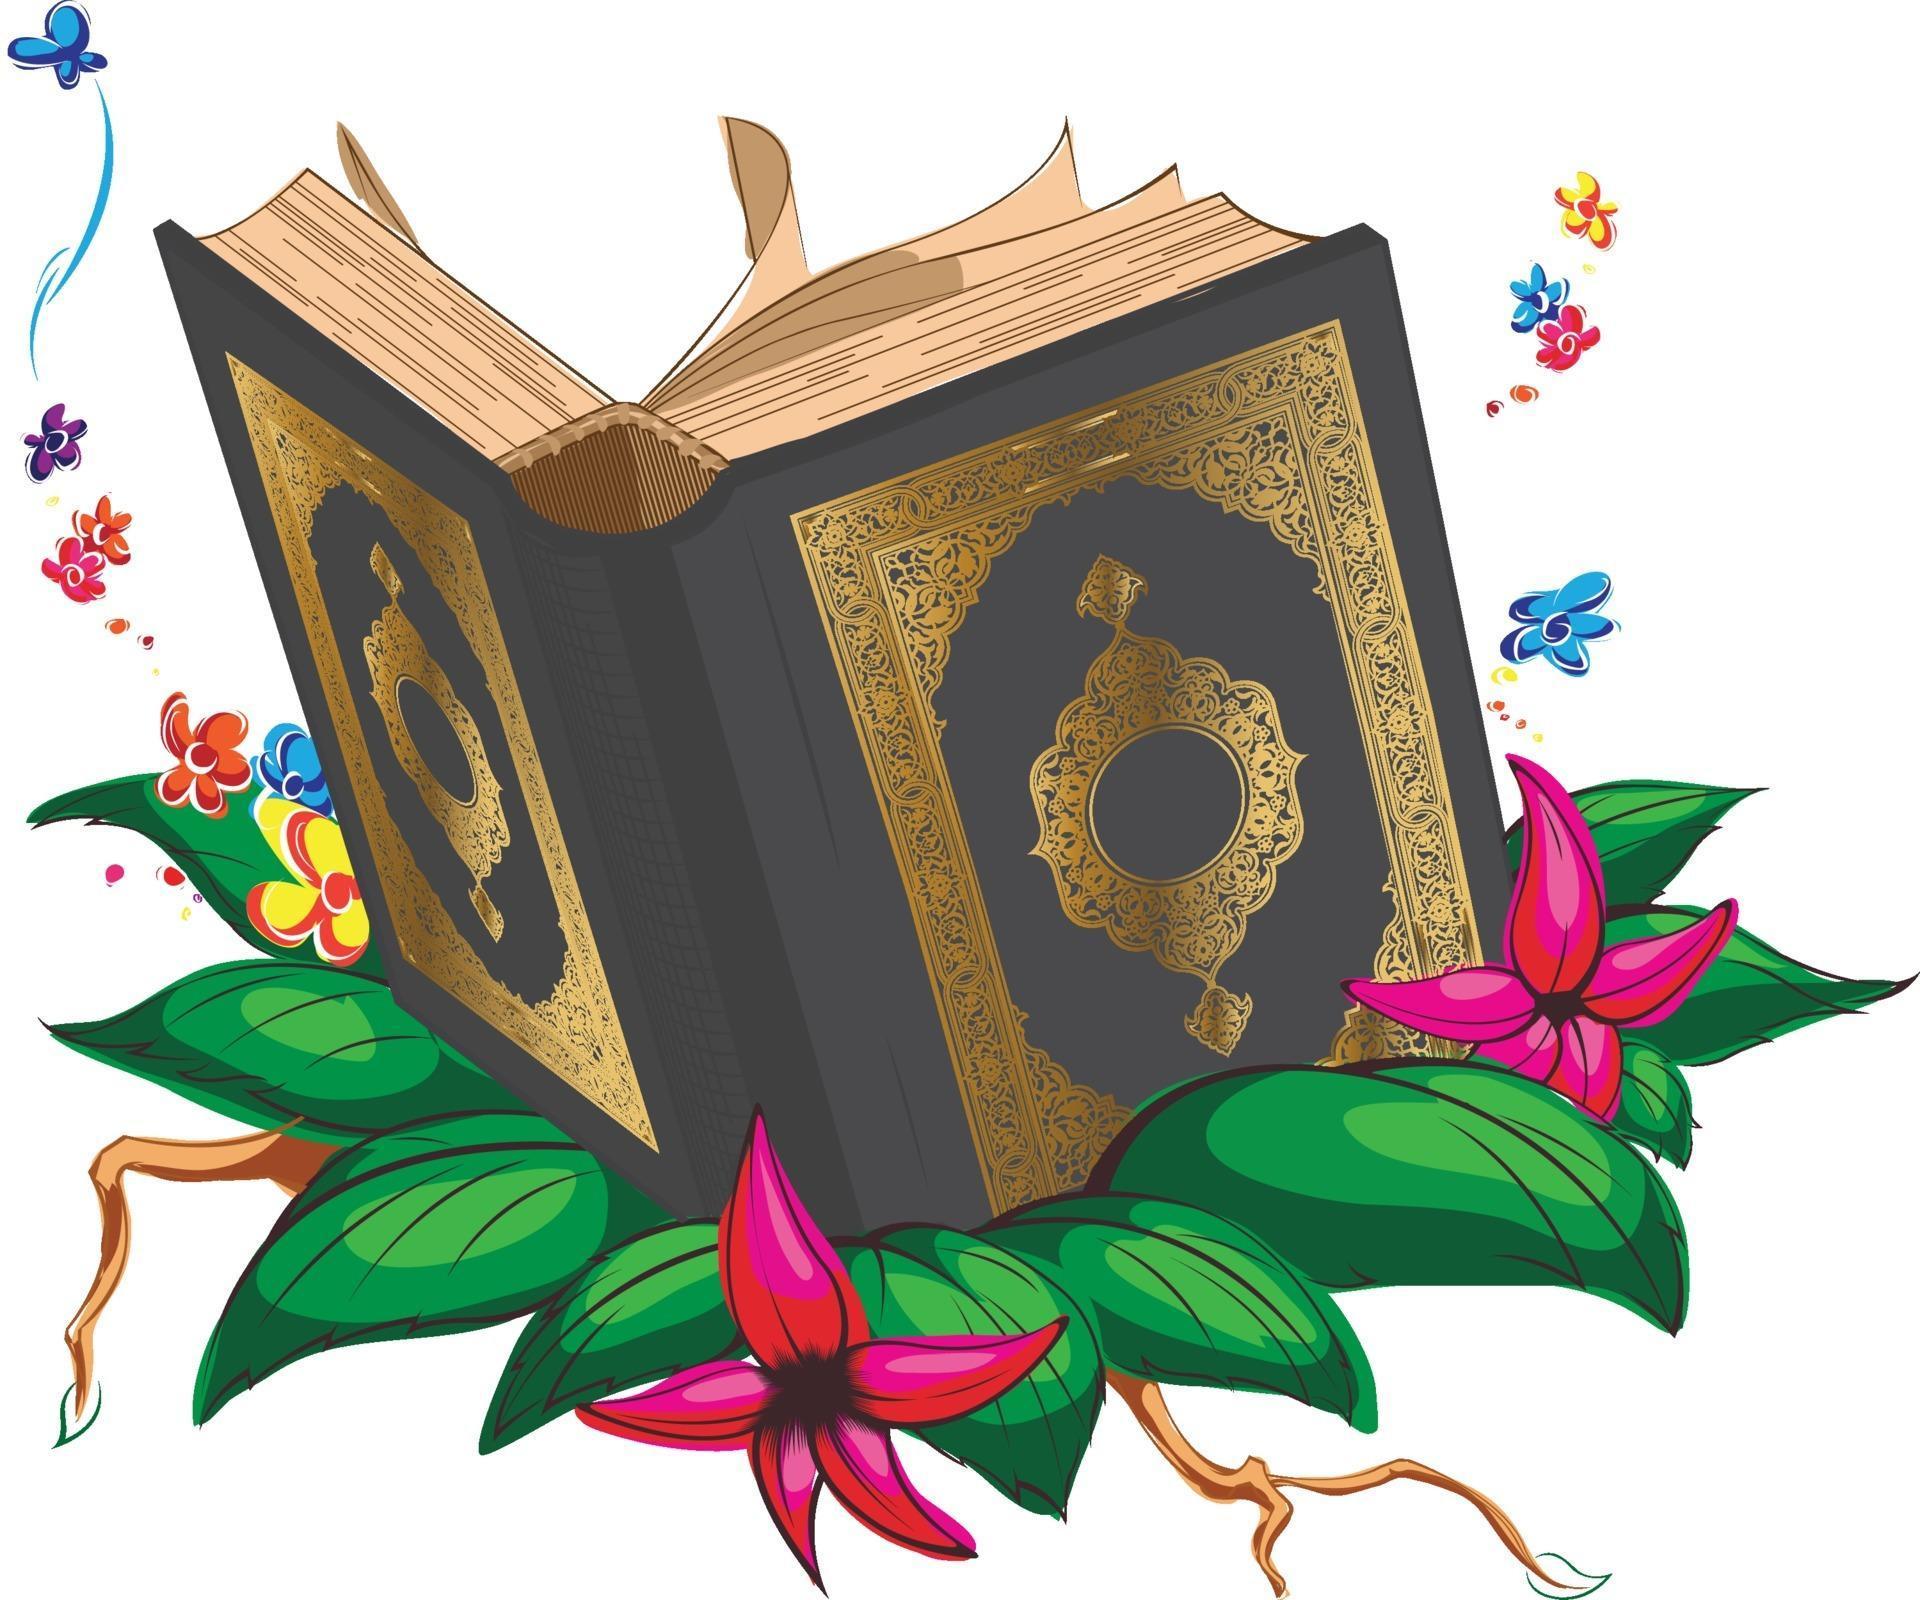 islam saint livre coran musulman arabe dessin animé illustration